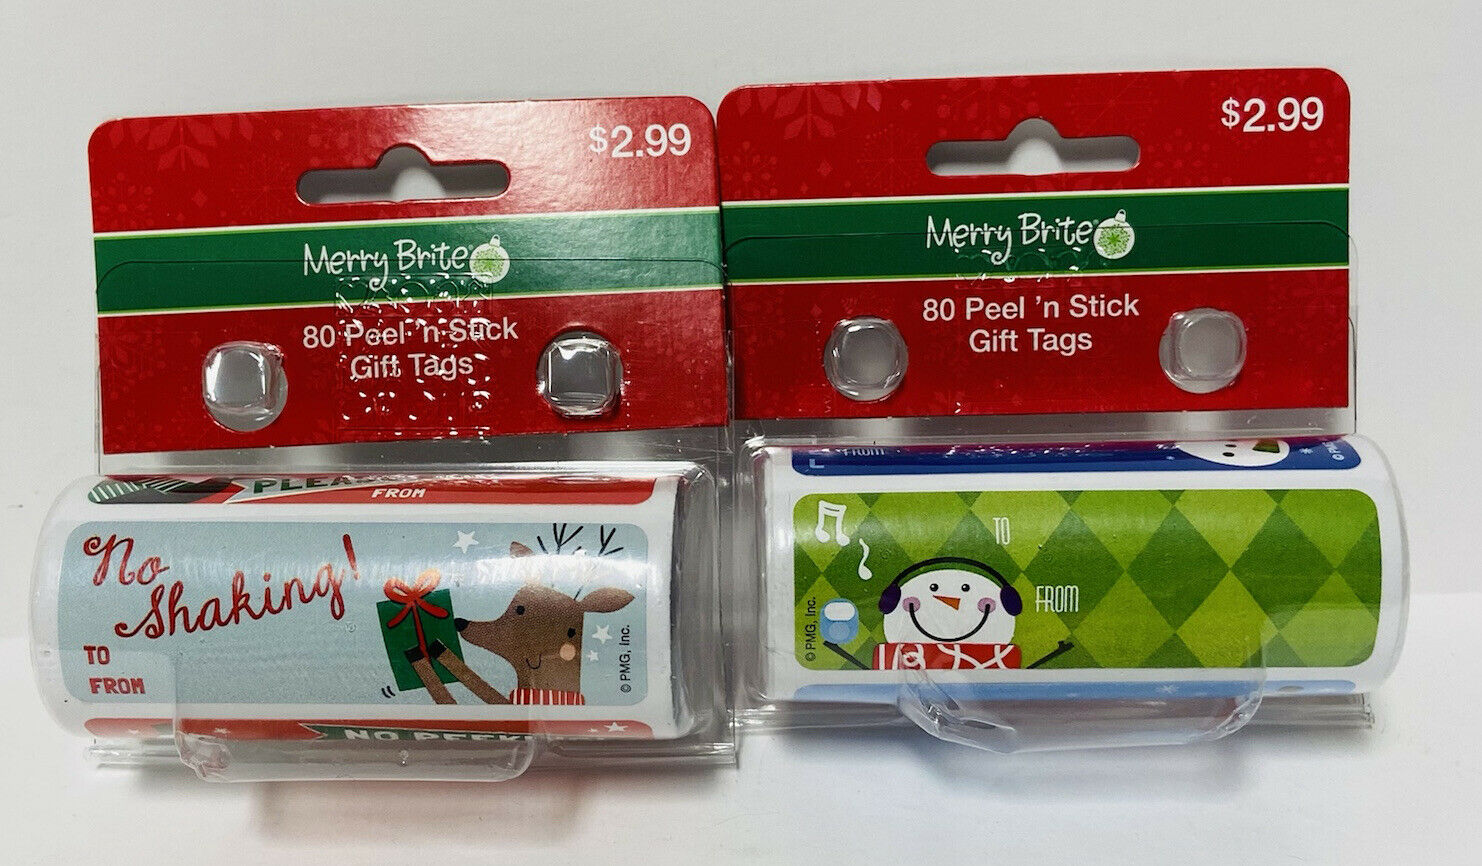 Merry Brite Gift Tags 2 Packs = 160 Peel ‘n Stick Christmas Santa Presents New!